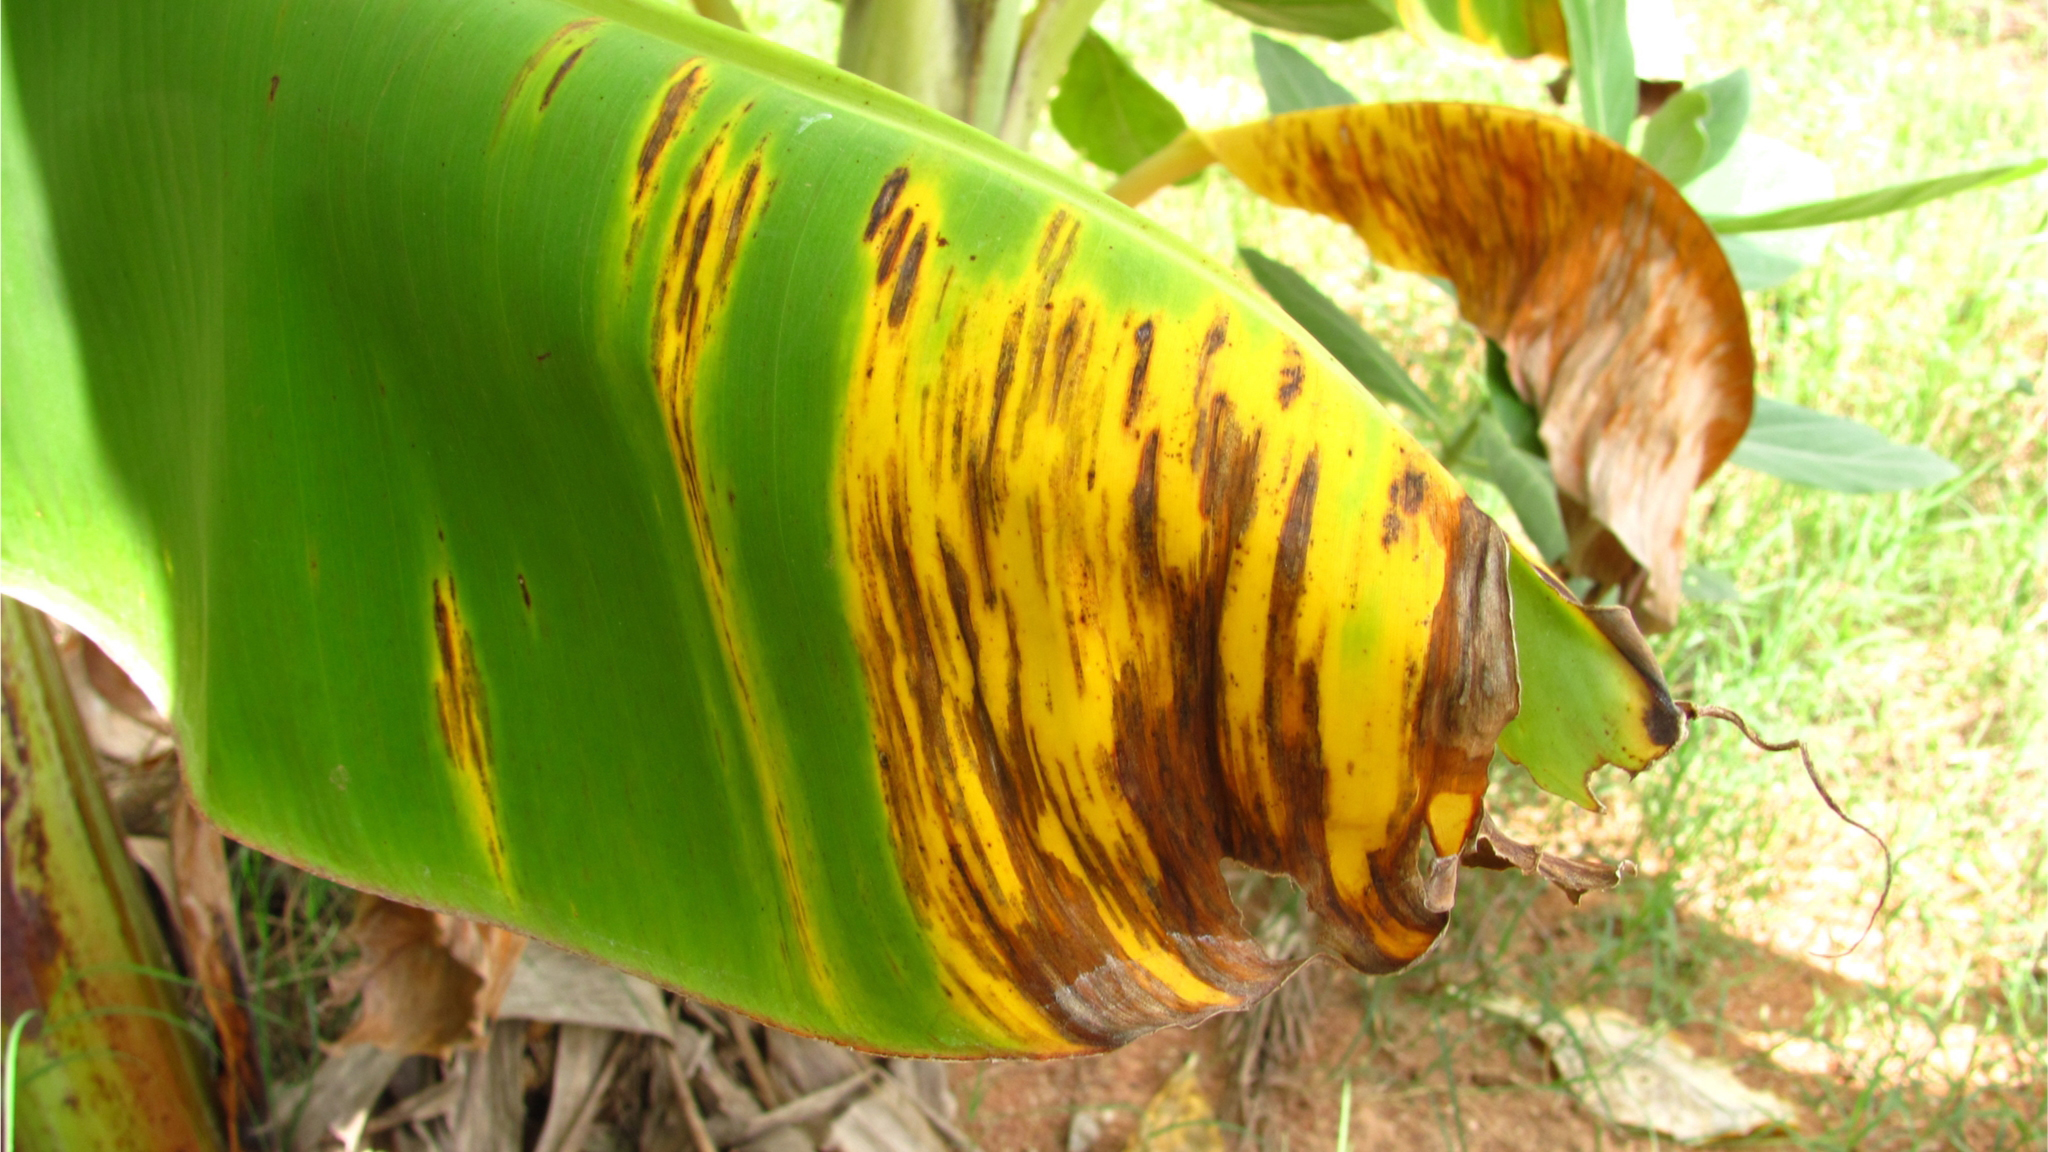 Banana plant with Panama disease